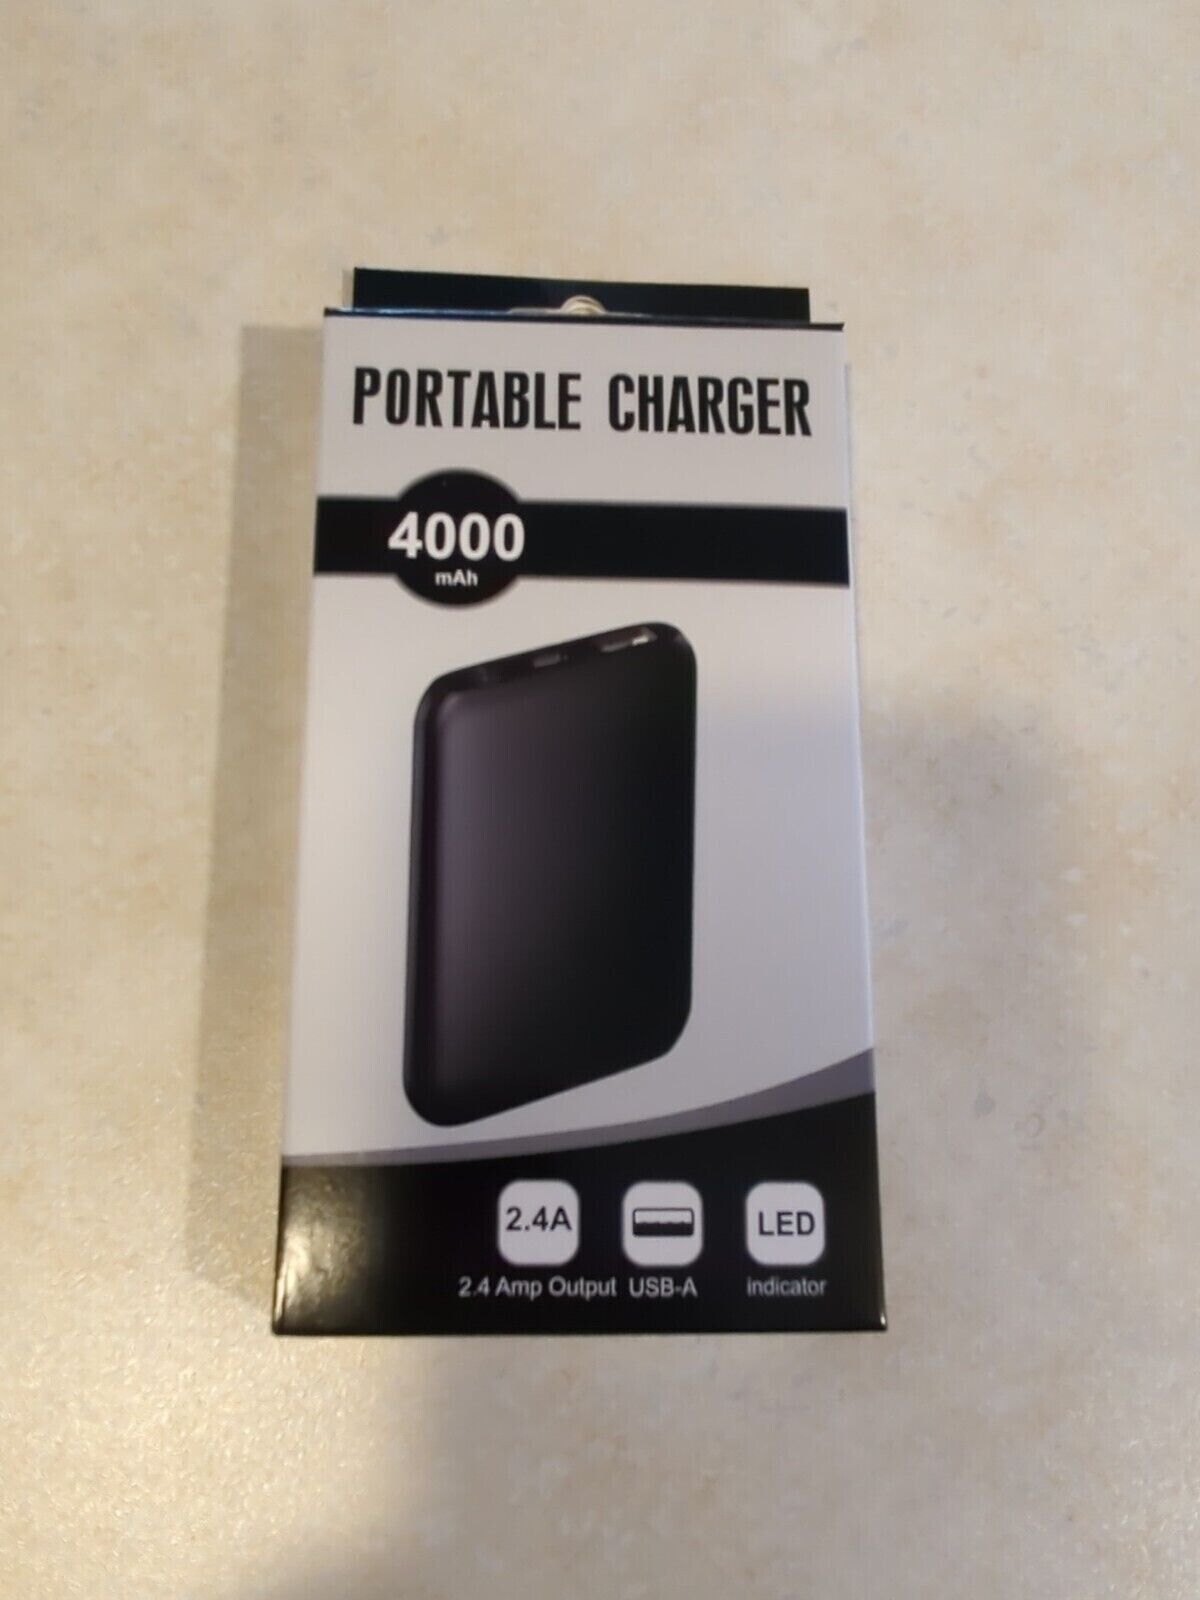 Portable Charger - 4000 mAh Portable Power Bank, BP4A1, Black